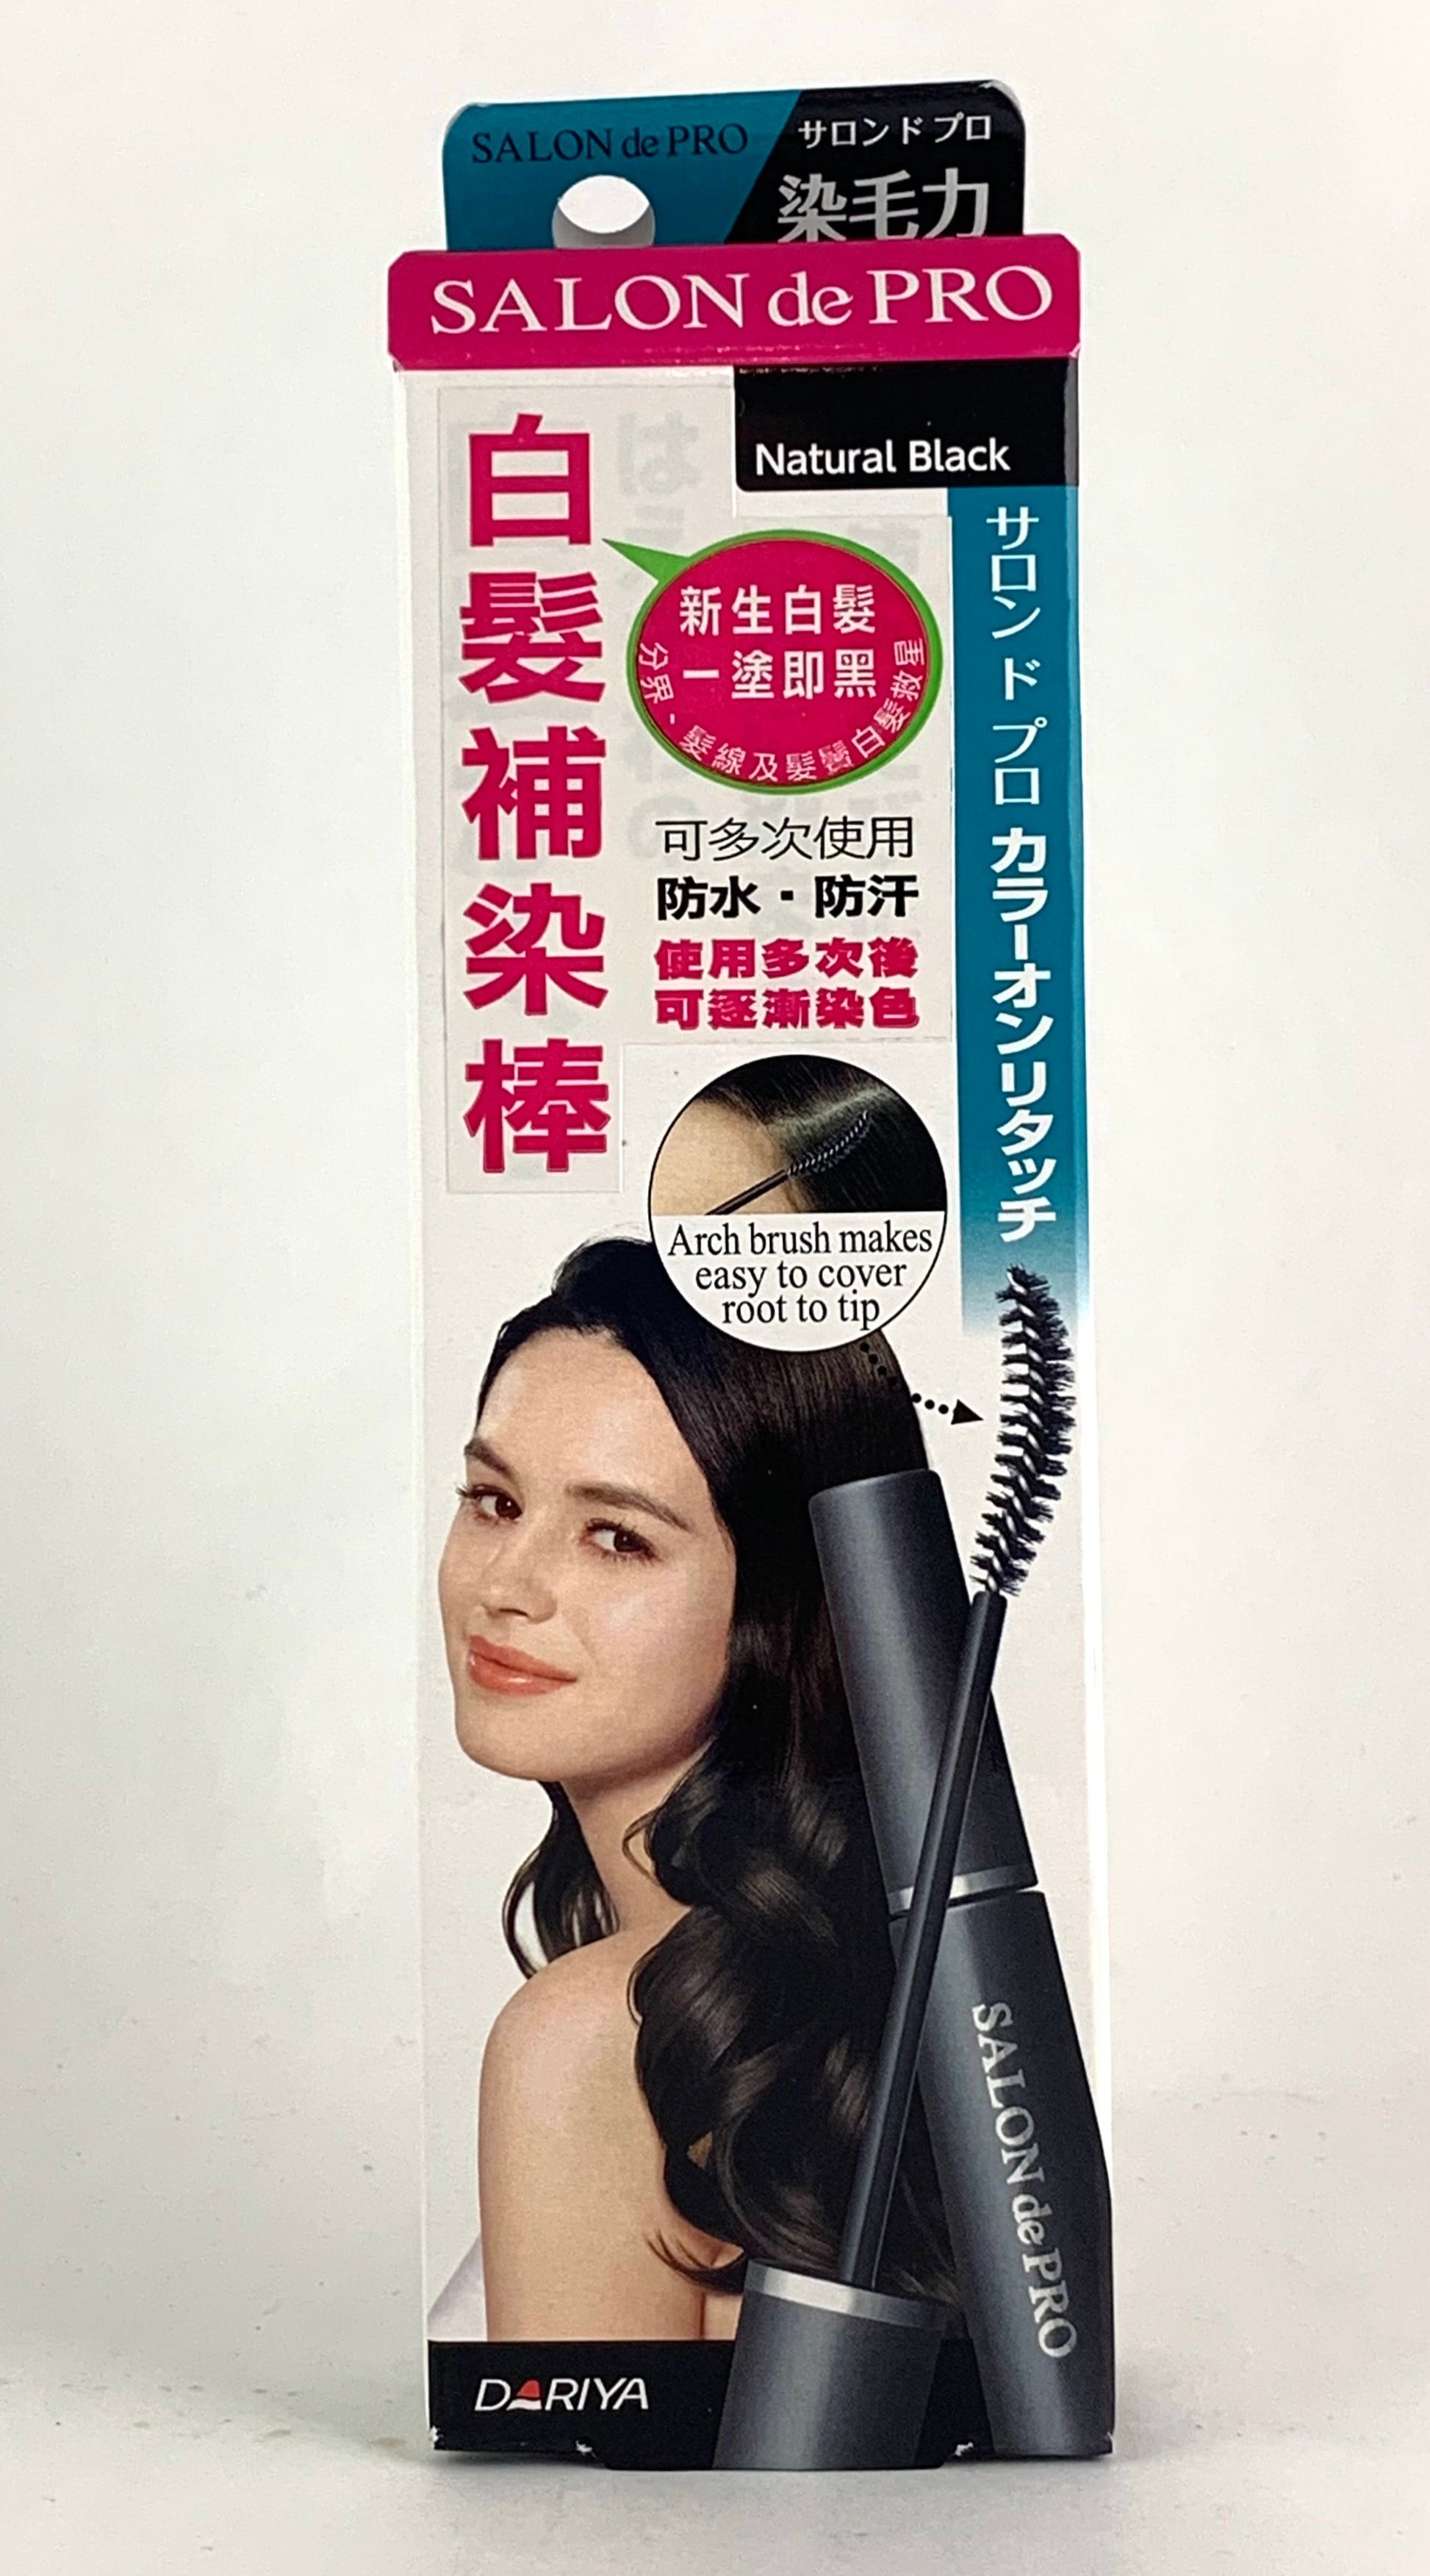 Dariya Salon de Pro Touch-Up Root Temporary Instant Color Dye Hair Mascara 15ml.